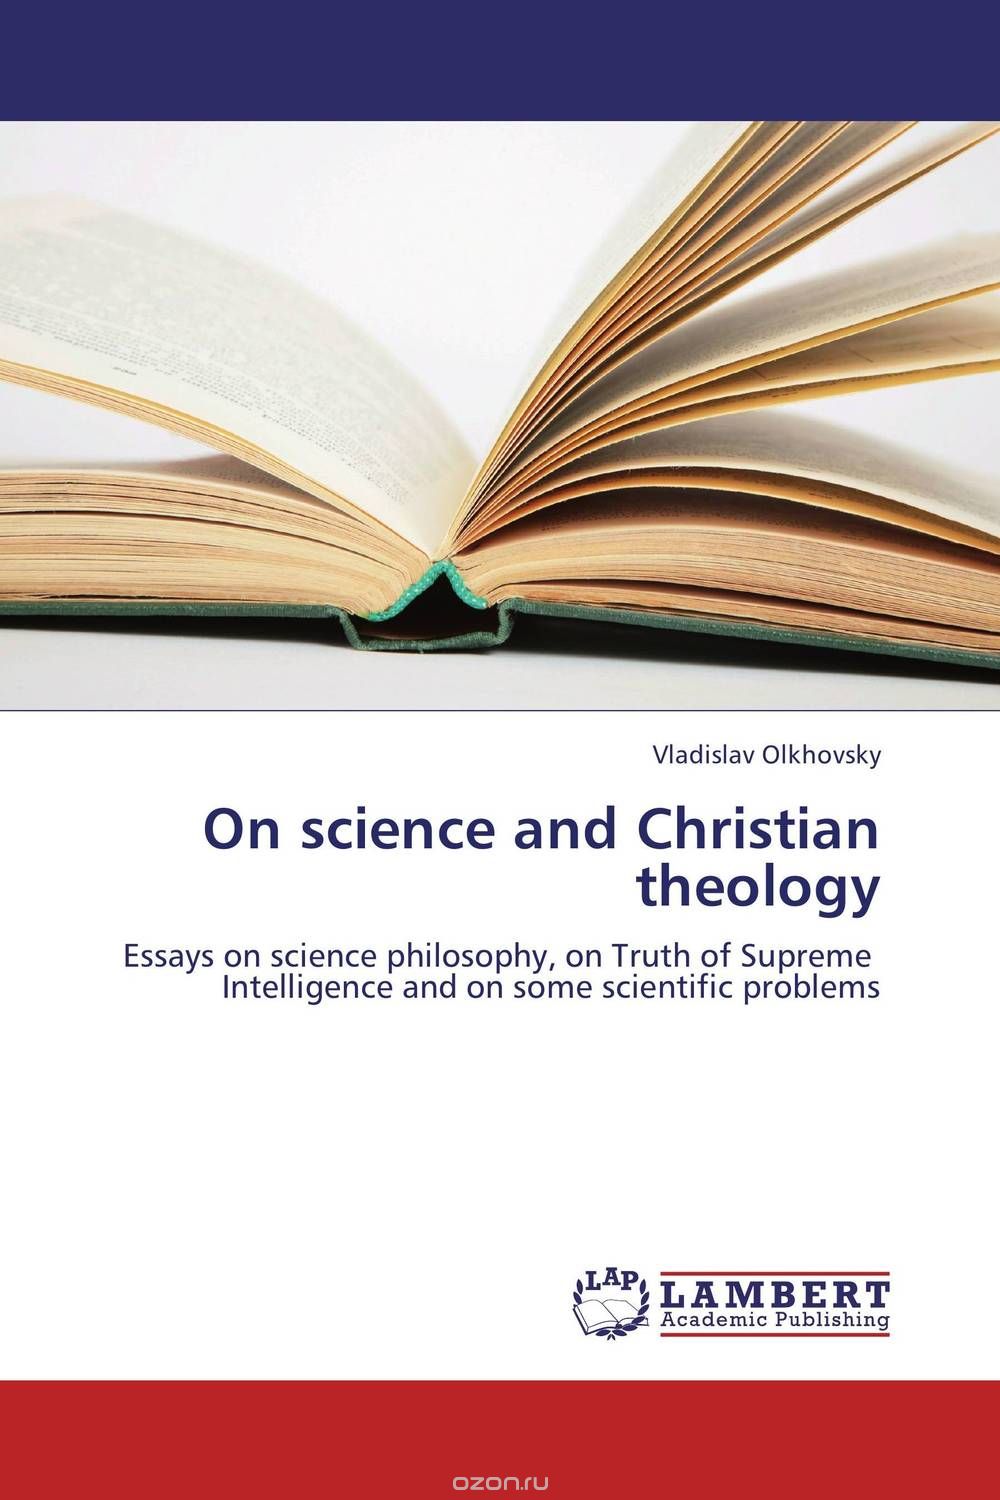 Скачать книгу "On science and Christian theology"